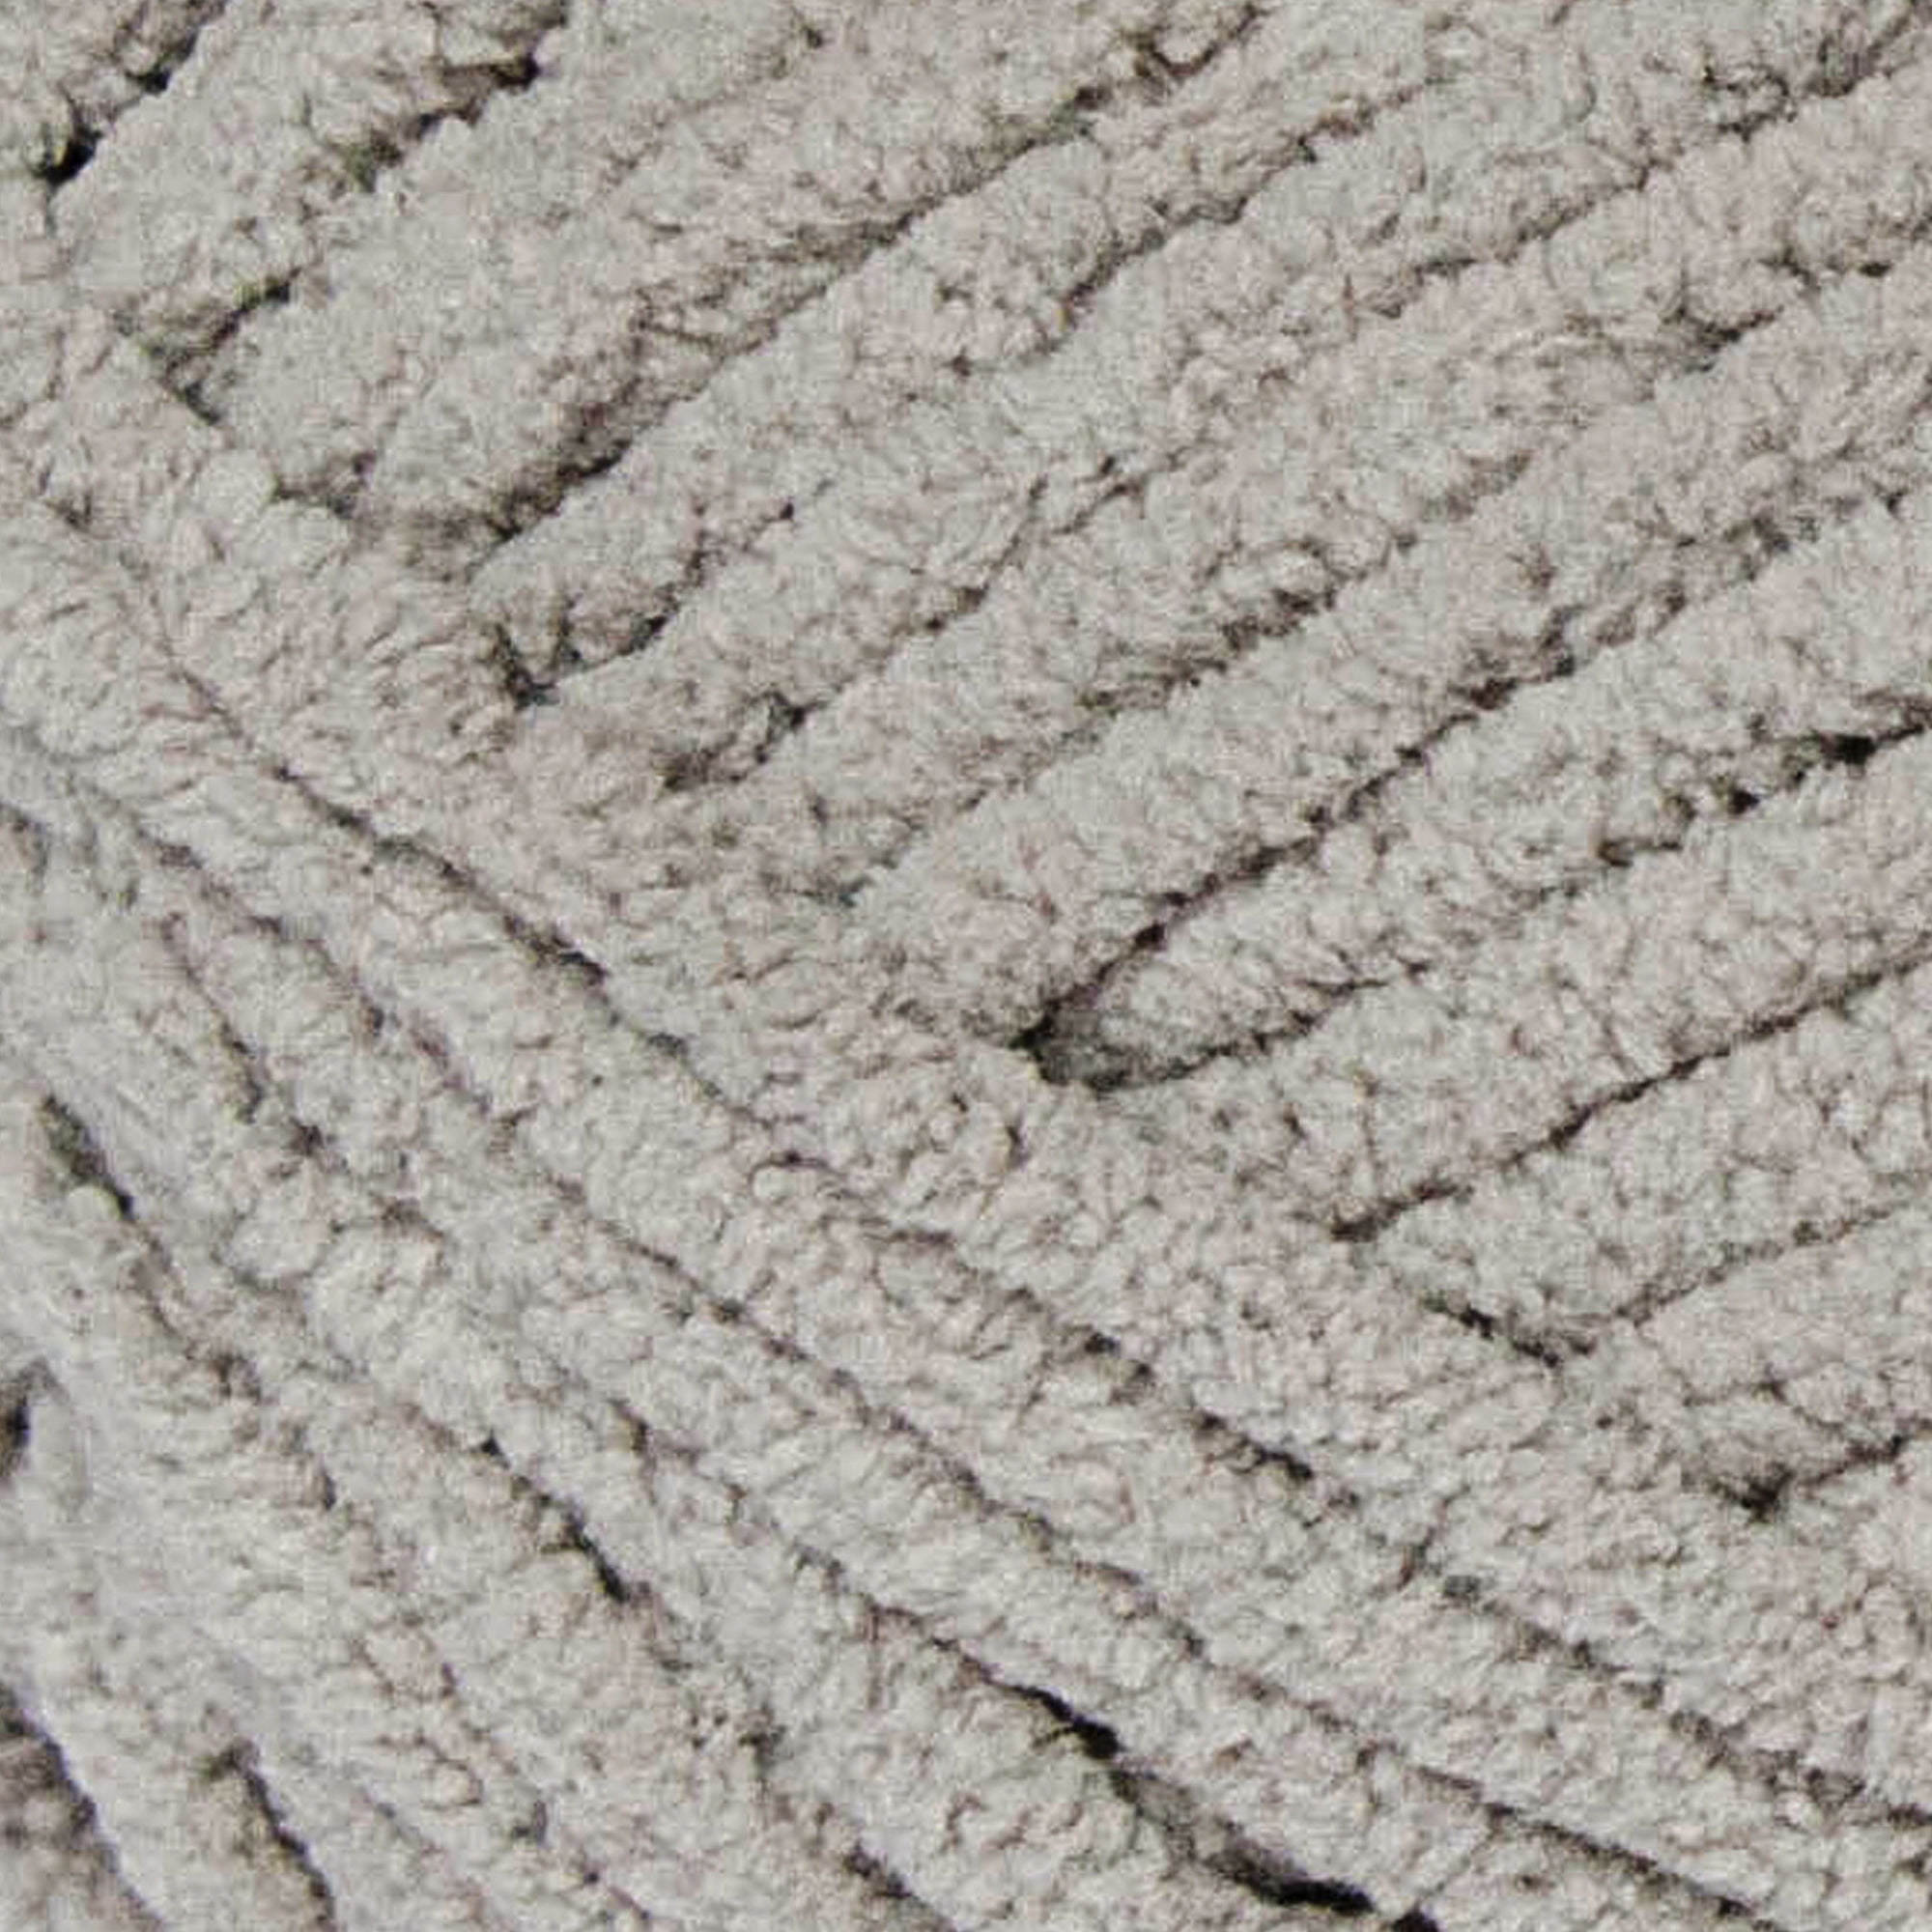 Bernat Pale Grey Blanket Yarn (6 - Super Bulky), Free Shipping at Yarn  Canada